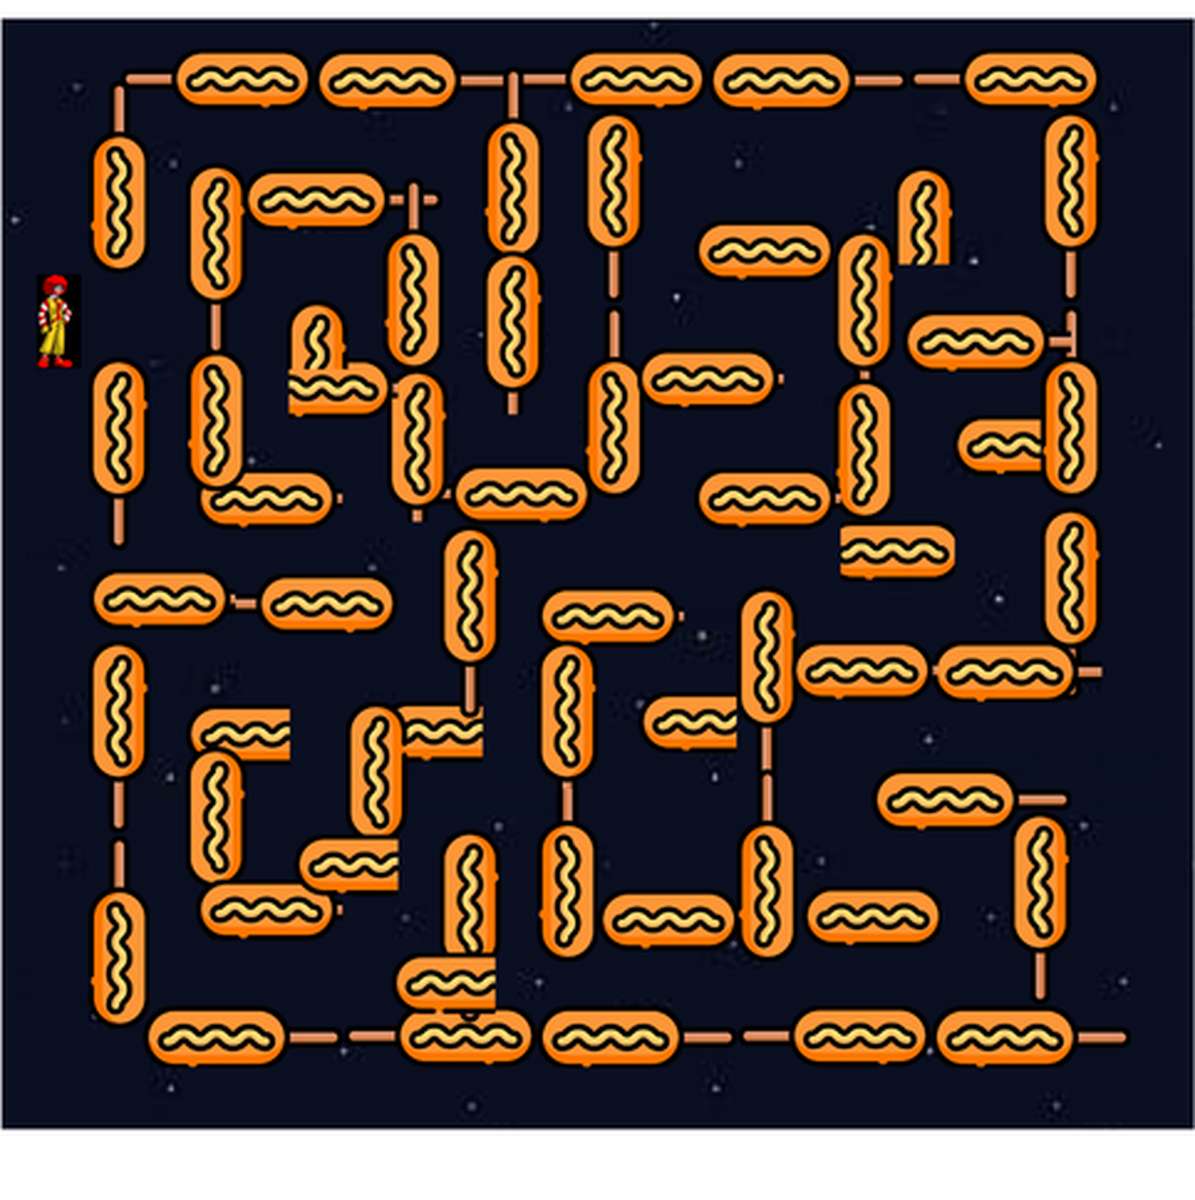 Ronald McDonald puzzle online a partir de fotografia